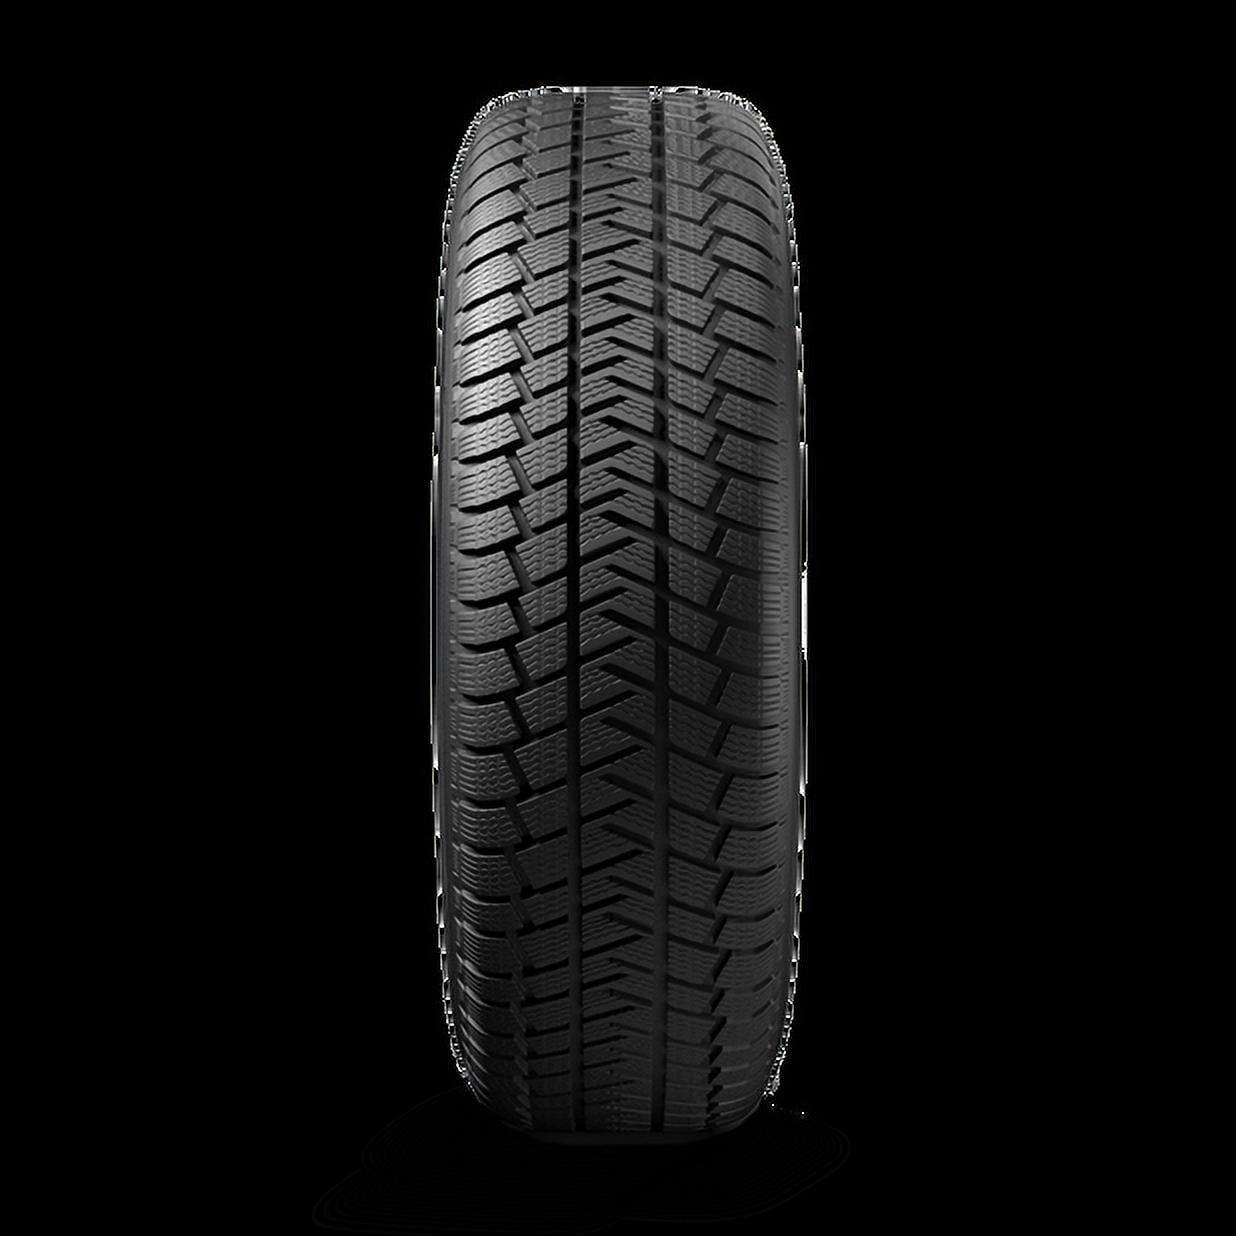 Latitude 255/55R18 Tire High Michelin Performance Alpin 105H